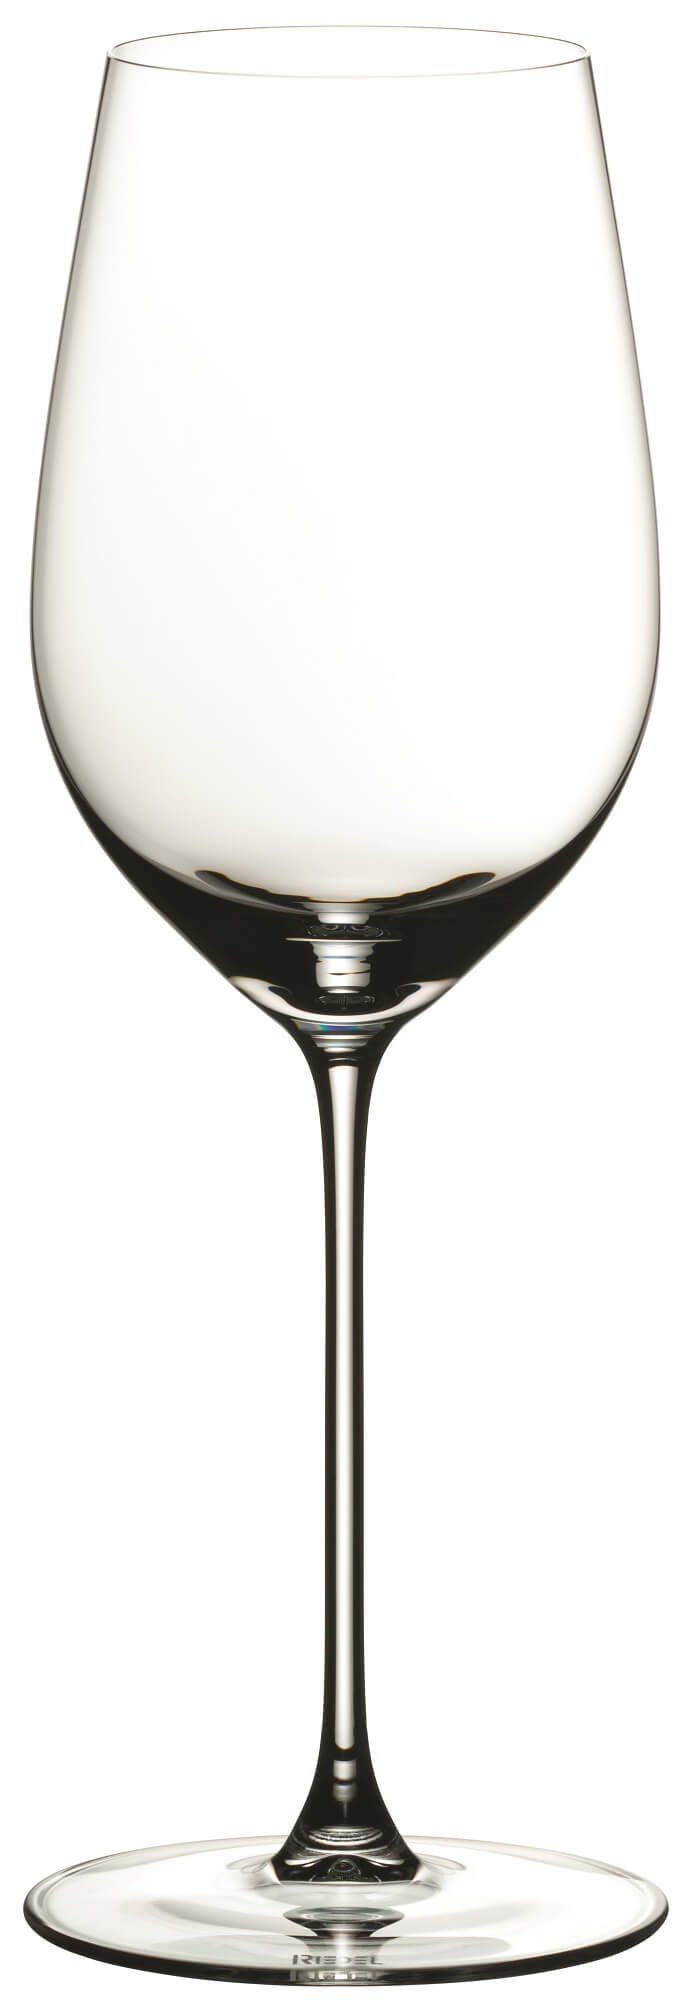 Riesling/Zinfandel glass Veritas, Riedel - 395ml (2 pcs.)